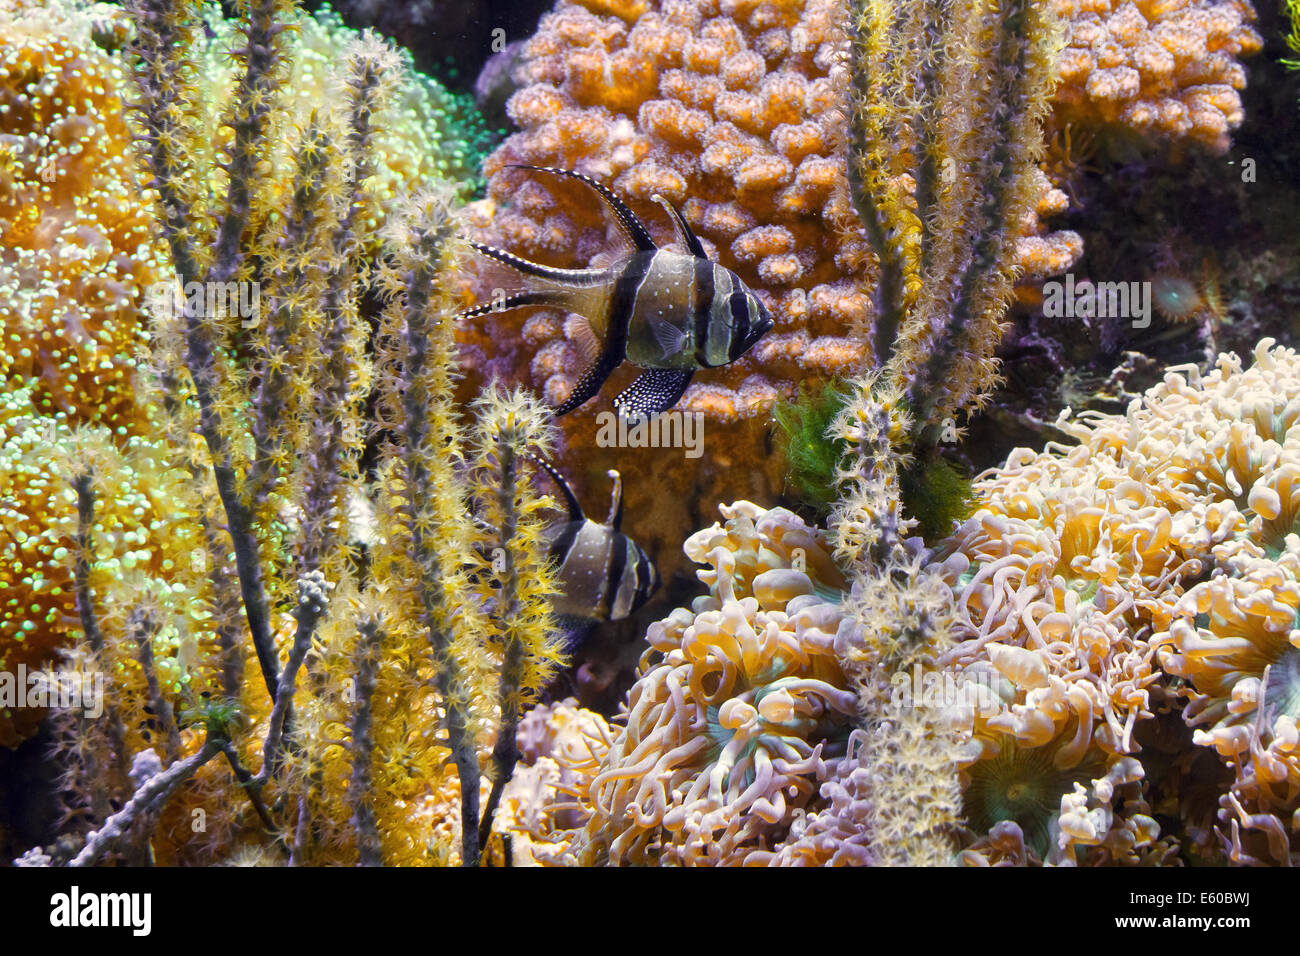 tropical aquarium with Pterapogon kauderni fish and sponges Stock Photo